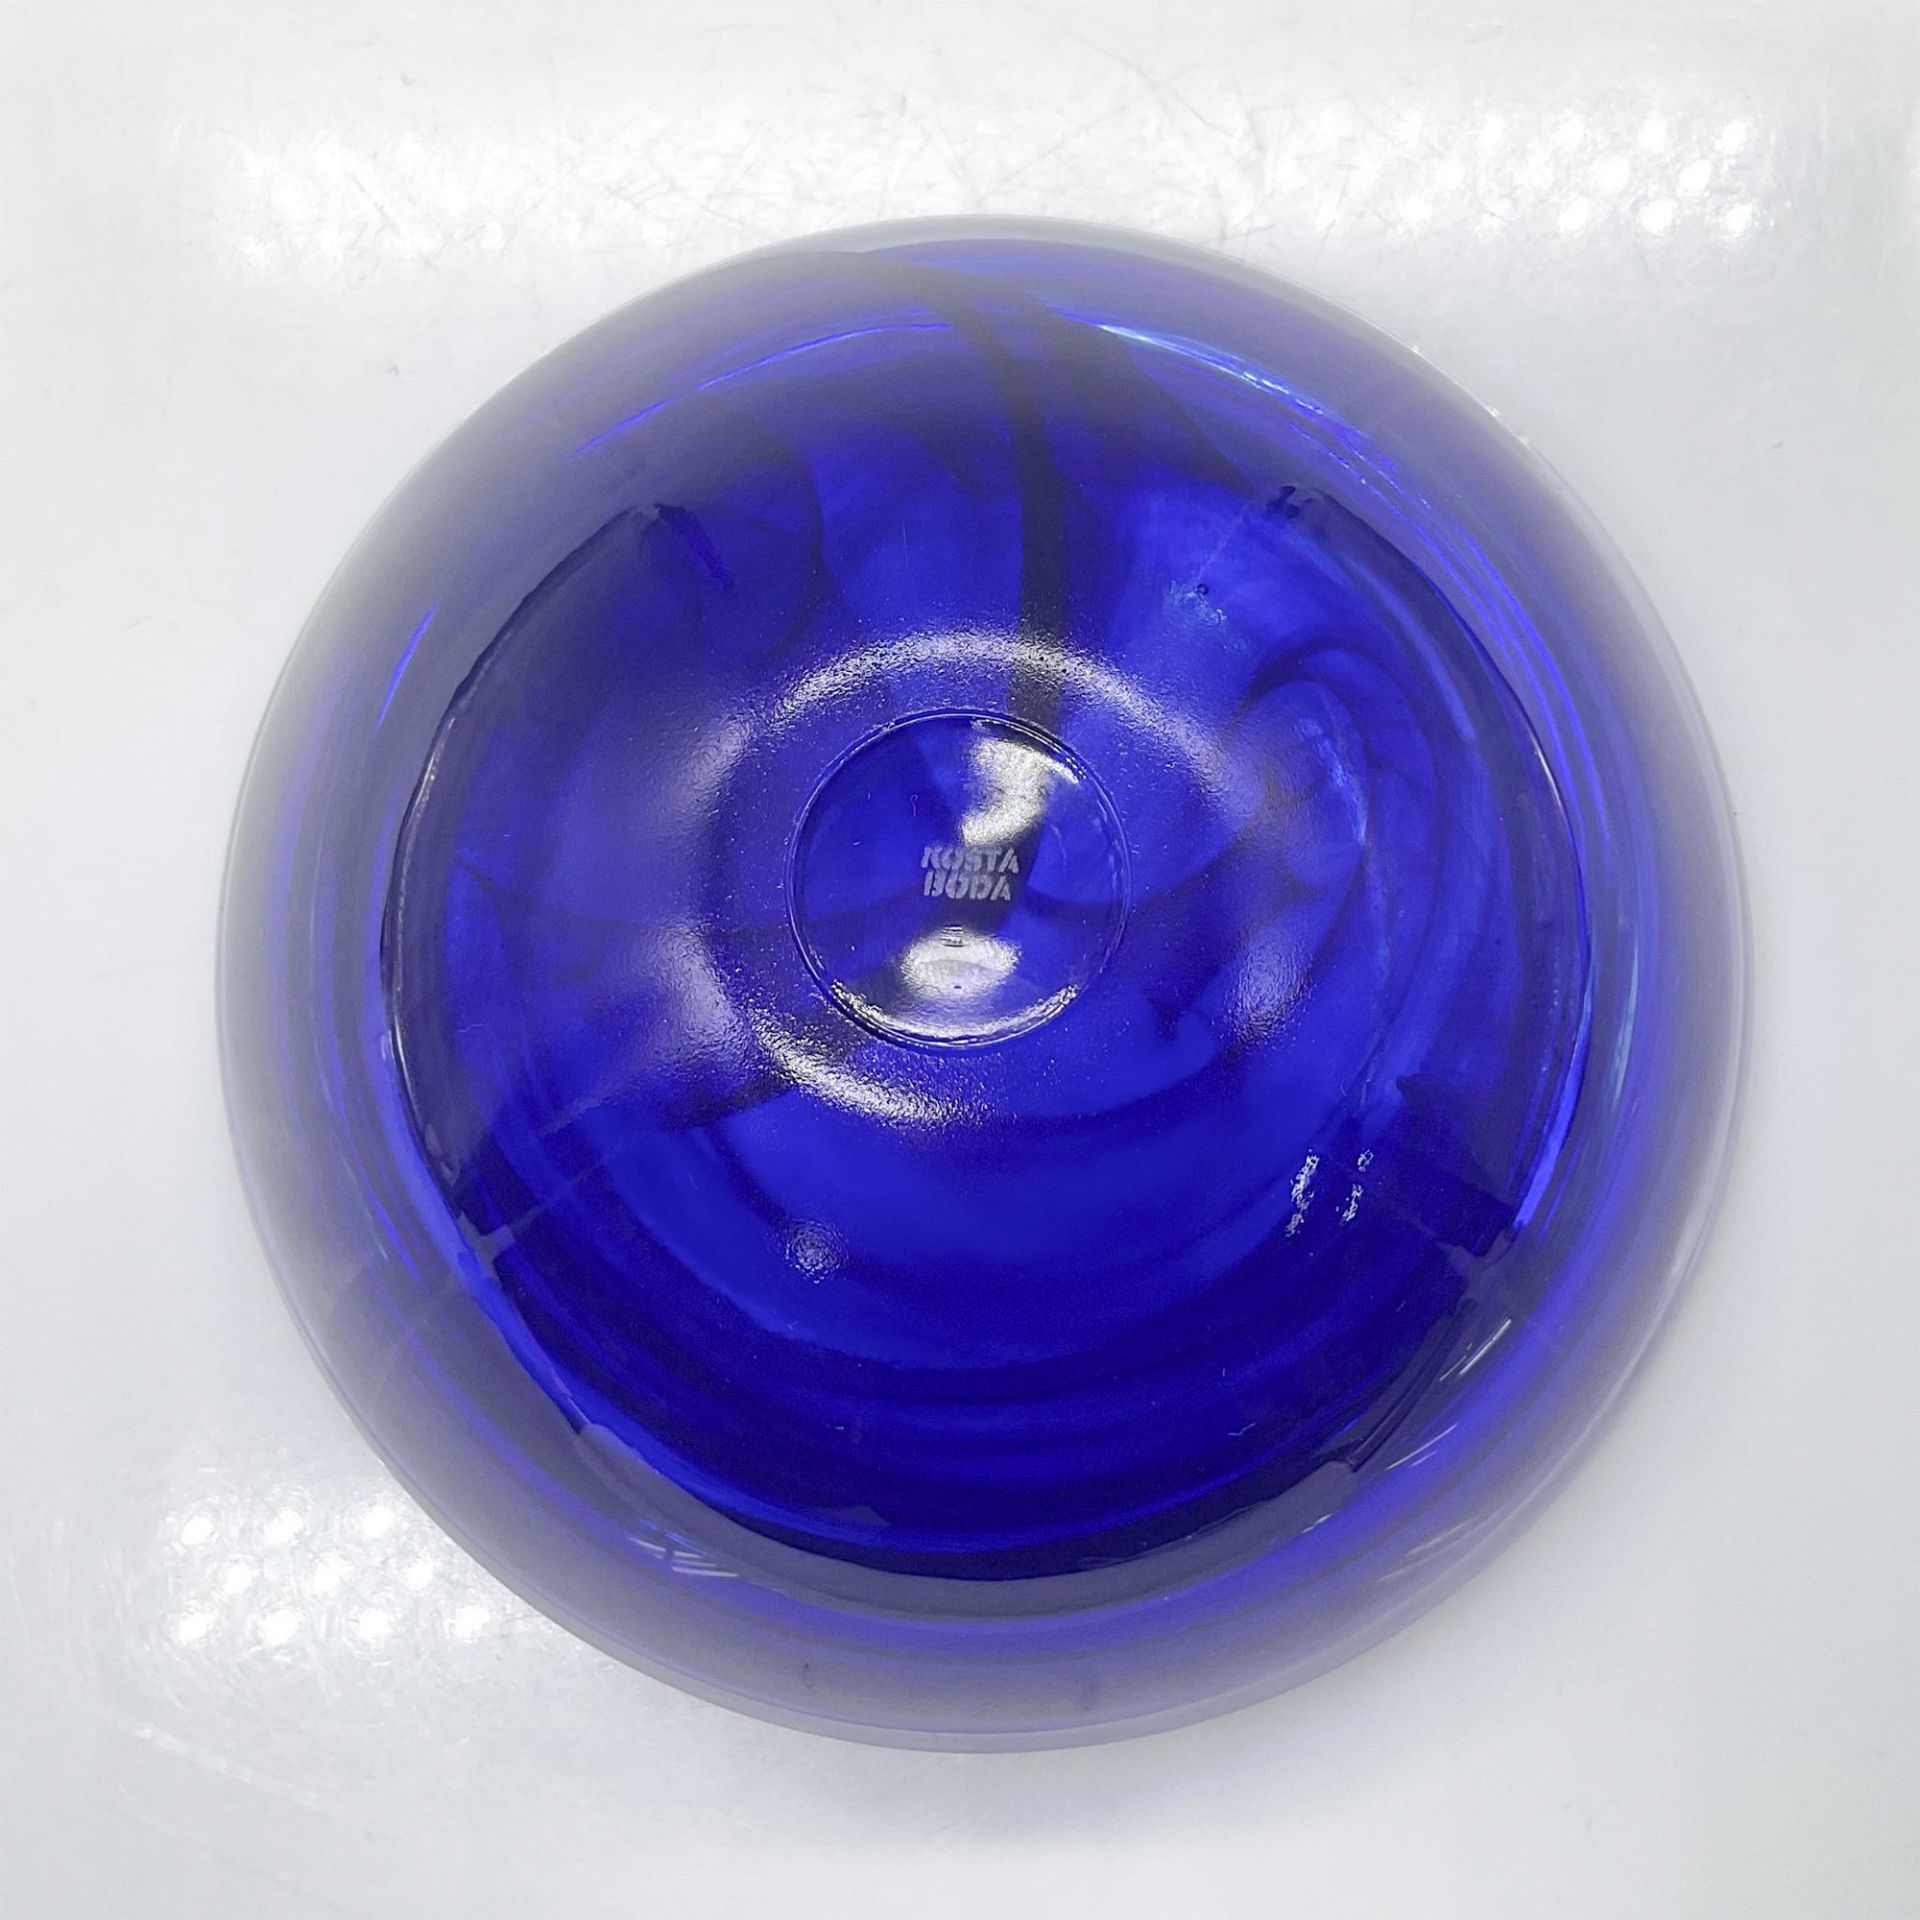 Kosta Boda Art Glass Blue Bowl - Image 3 of 3